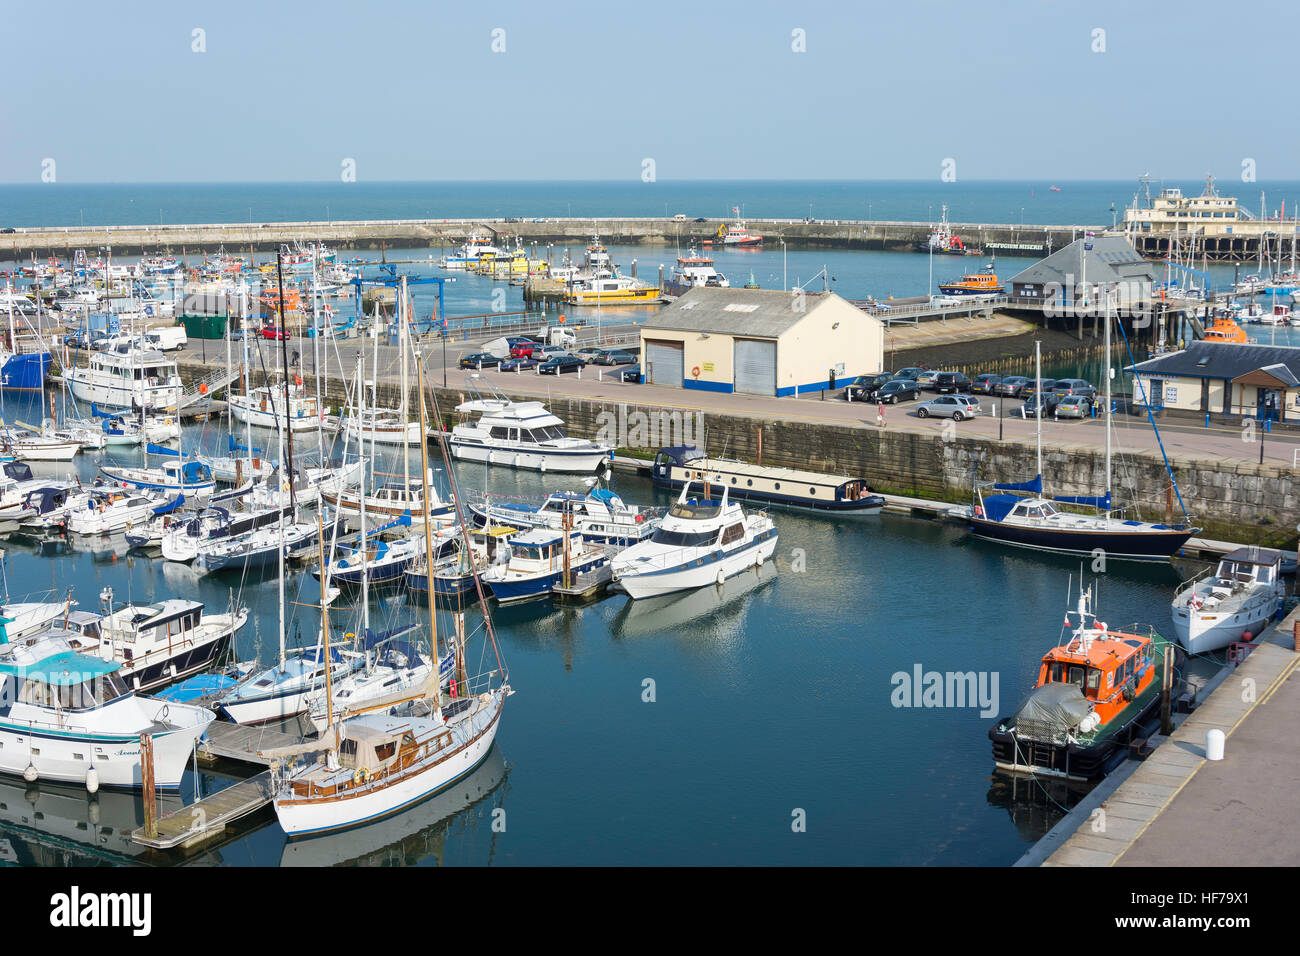 Royal Harbour Marina, Ramsgate, Isle of Thanet, Kent, England, United Kingdom Stock Photo